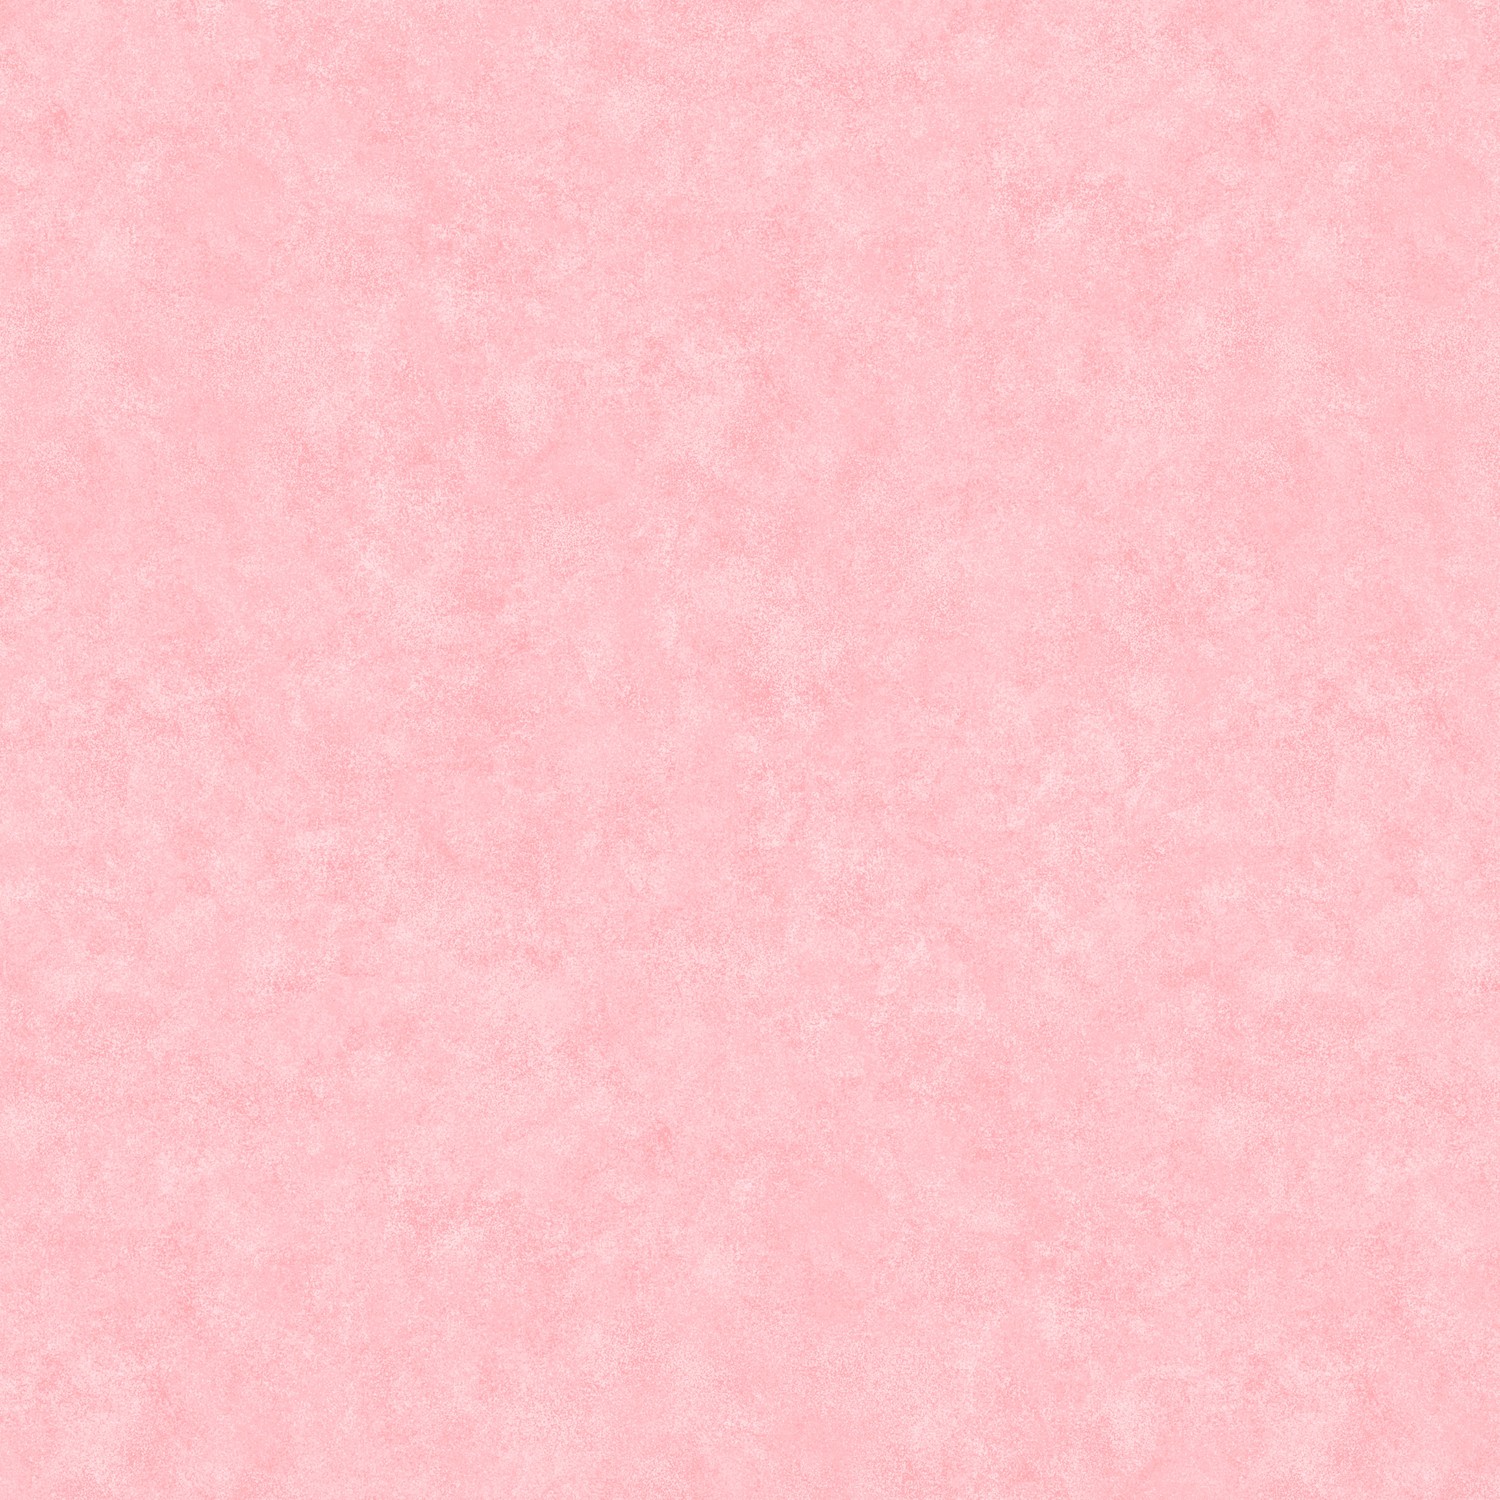 Mirage Tonals Baby Pink Quilting Cotton Fabric Yardage ...